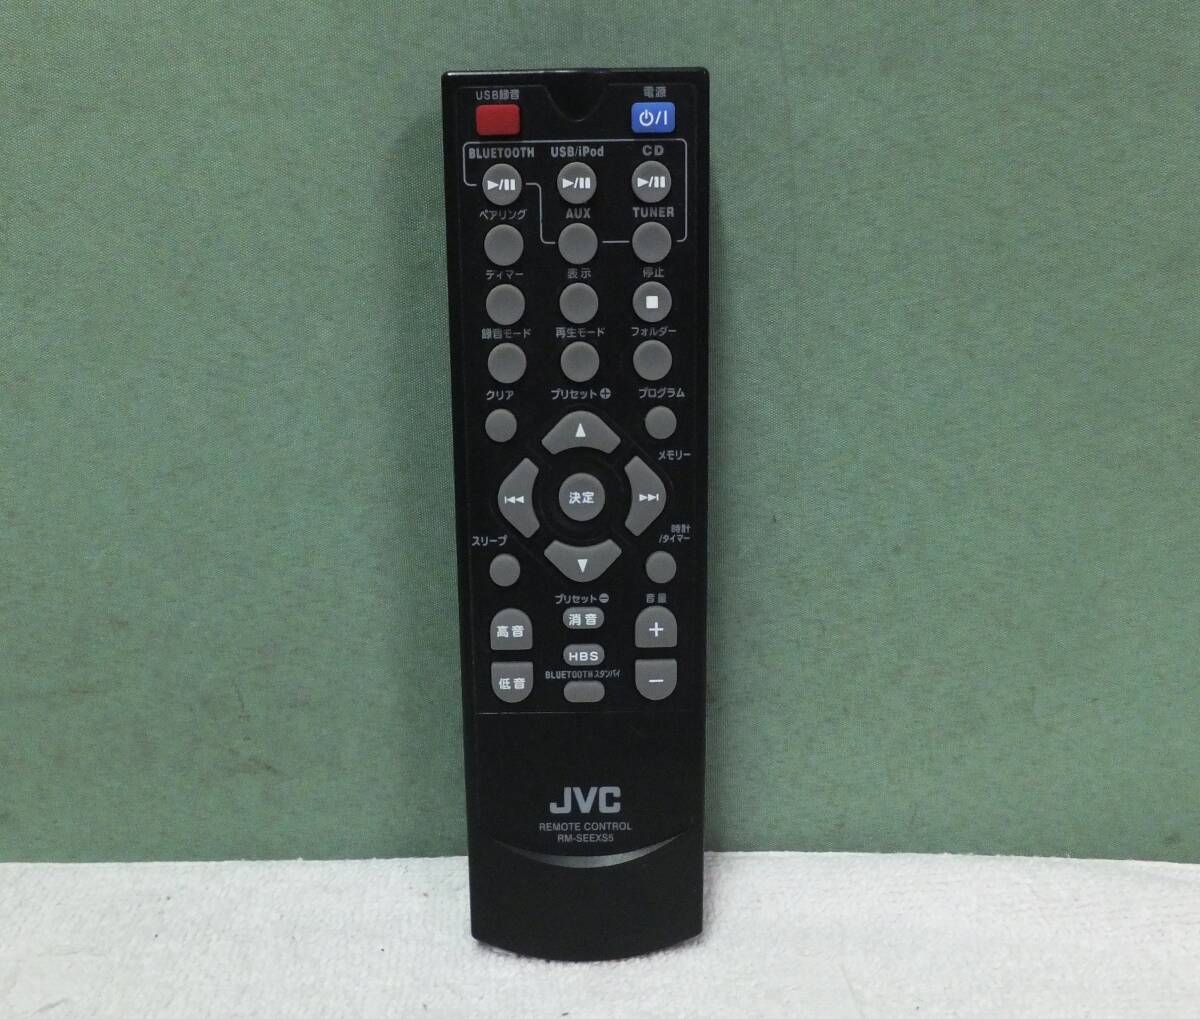 JVC пульт от аудиосистемы RM-SEEXS5 б/у 